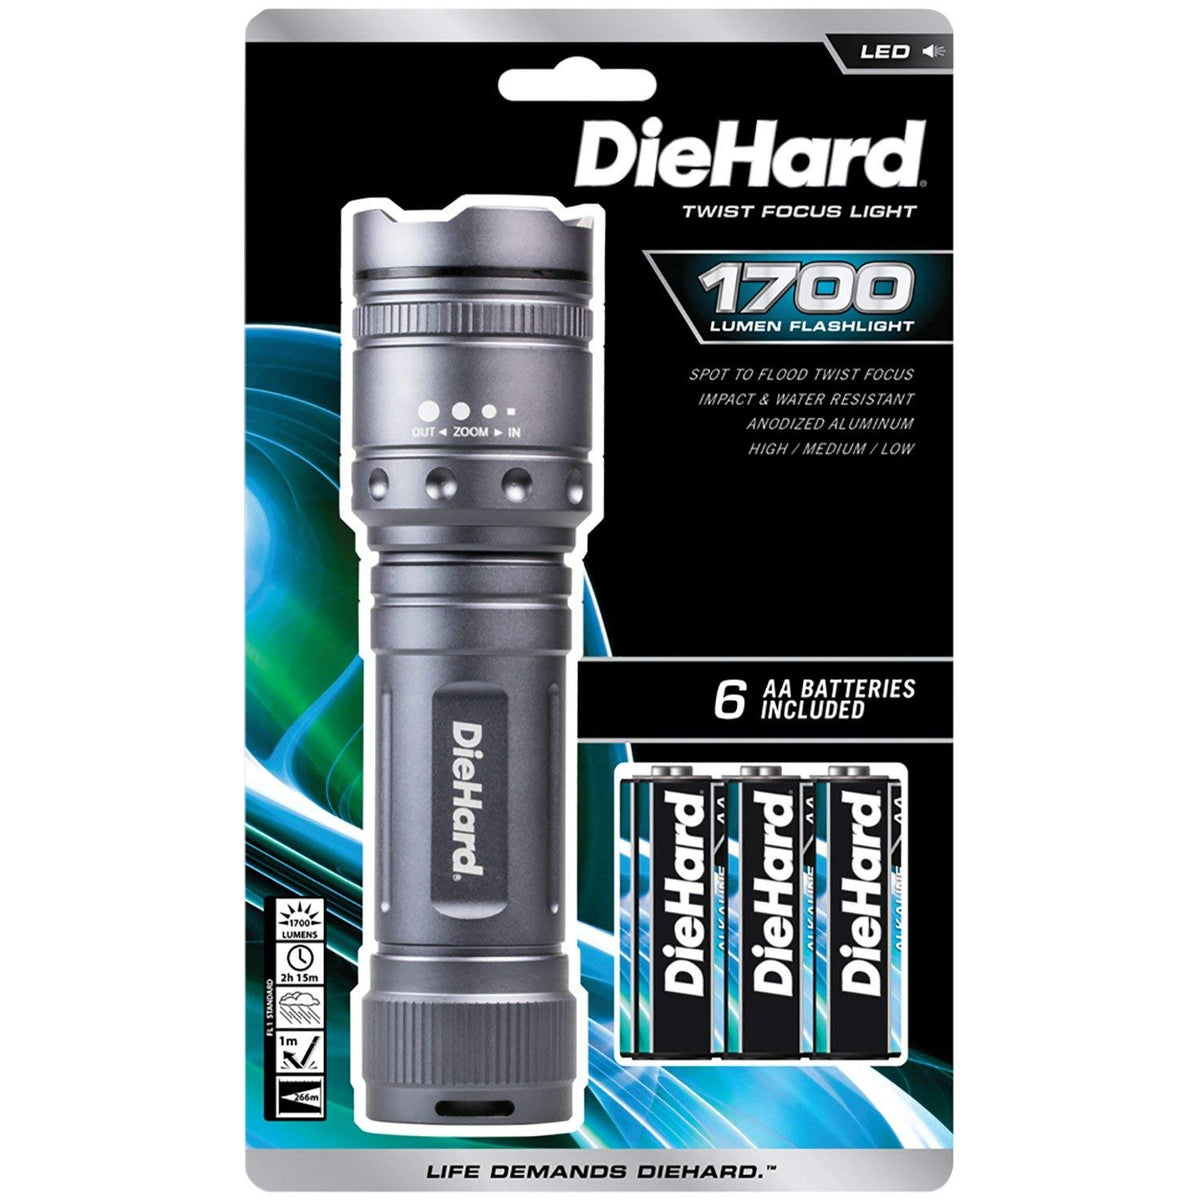 DieHard 41-6123 Twist Focus Flashlight, Grey, 1,700 Lumens